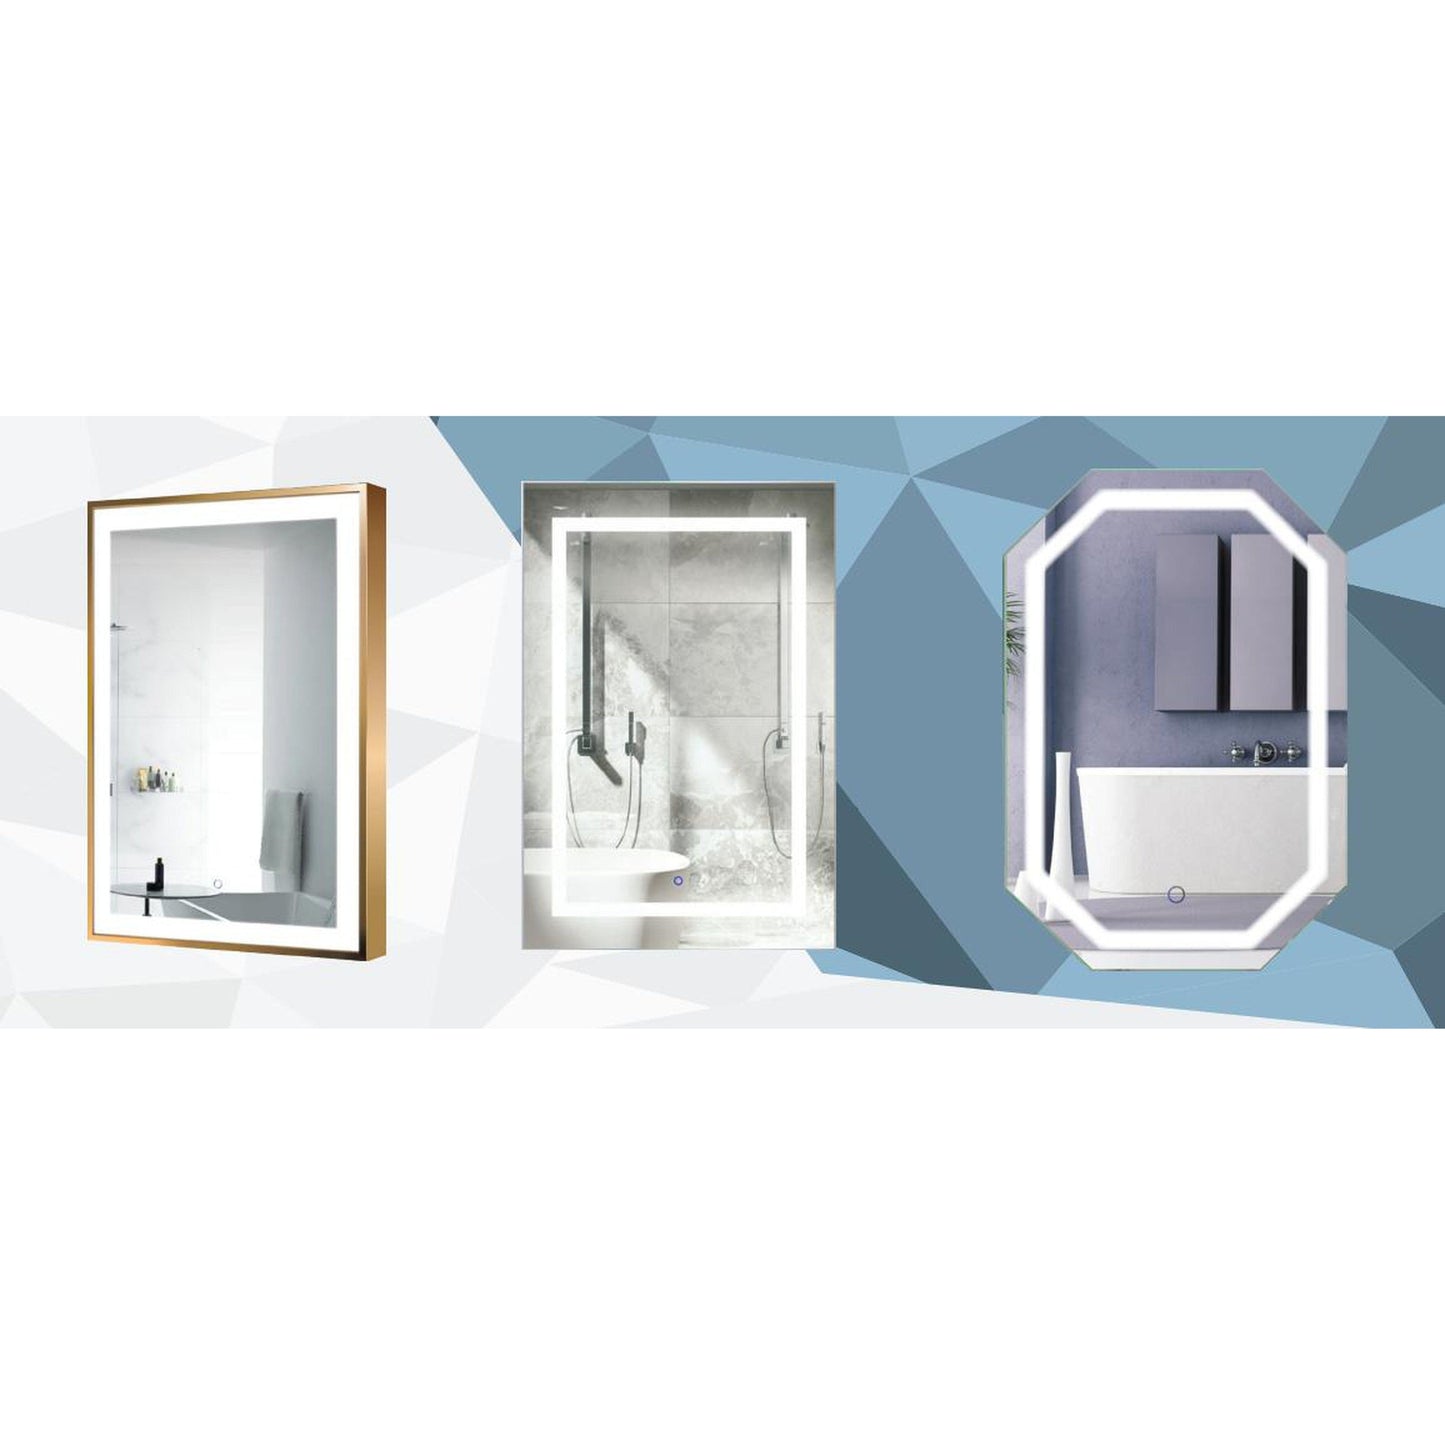 Krugg Reflections LED Bathroom Vanity Mirror On/Off Dimmer Controller